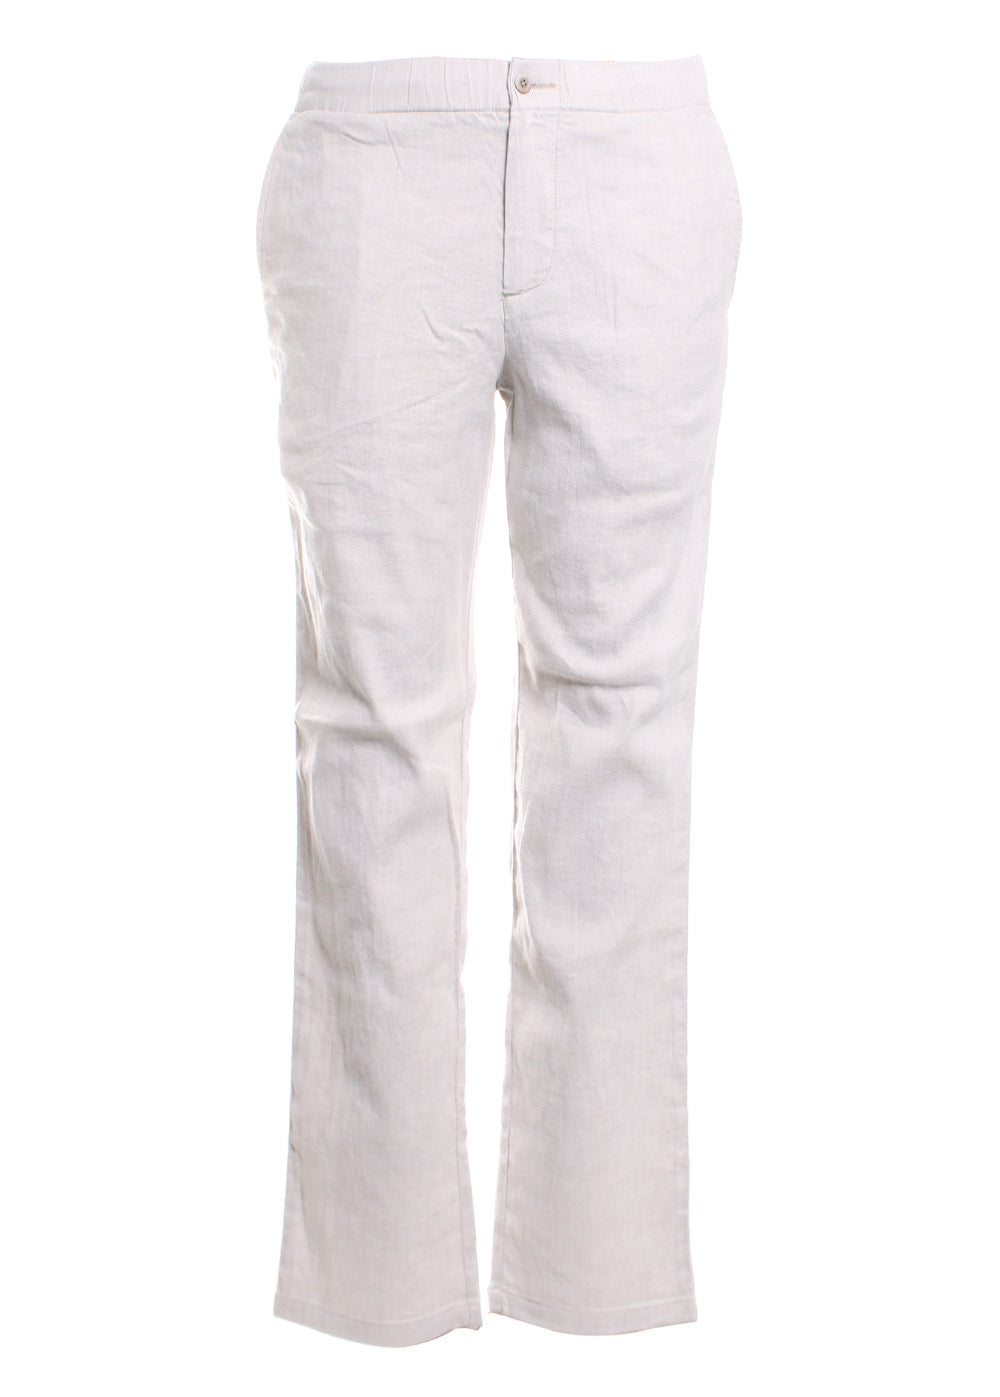 Cheap (Qunide) Men'S Loose Cotton And Linen Pants Beach Casual Sports Pants  Solid Color Seven Points Cotton And Linen Shorts | Joom